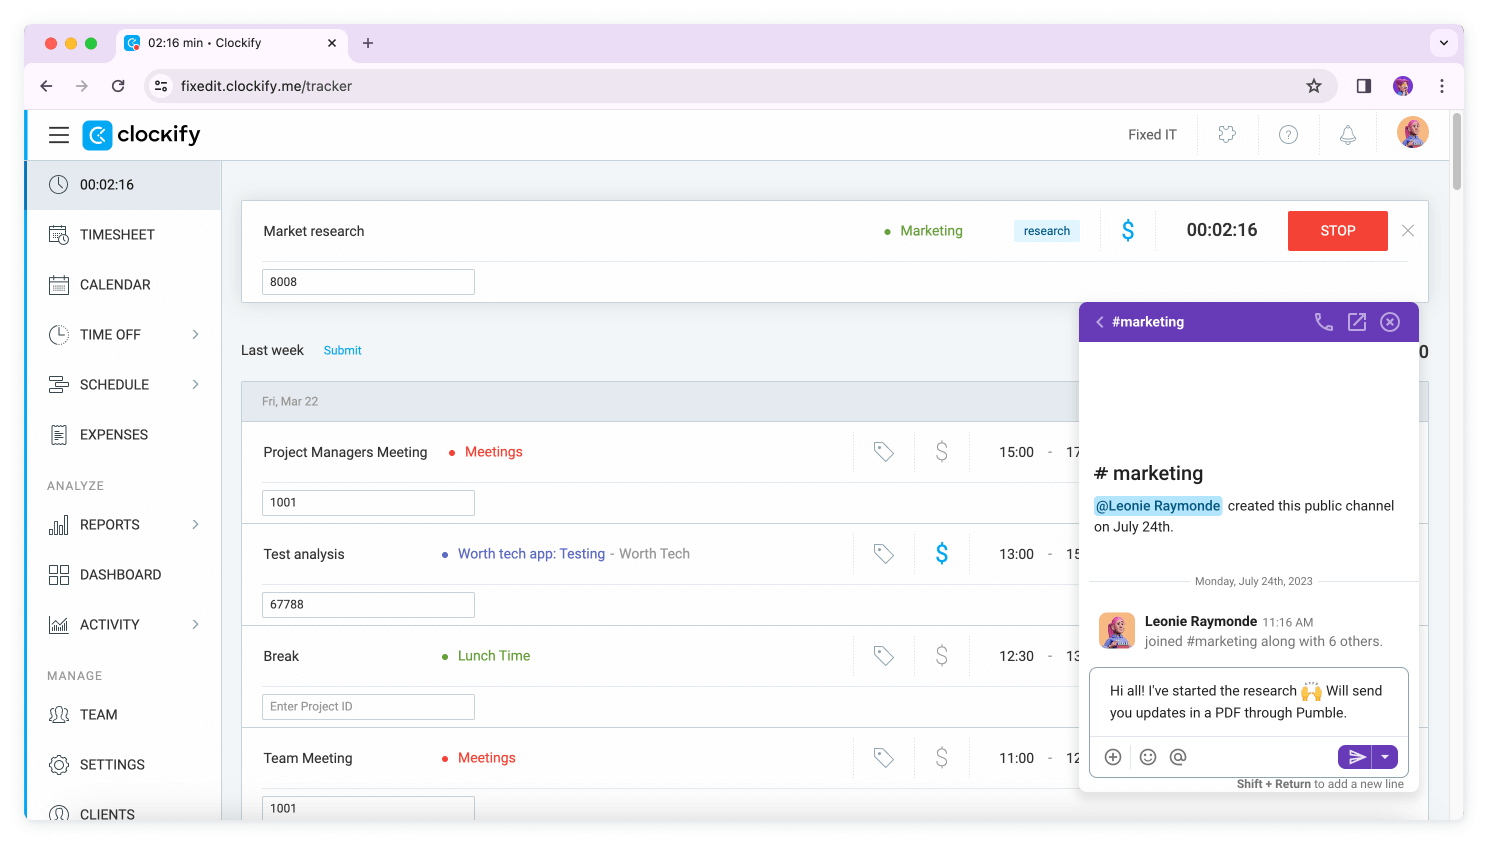 Connecteam alternative Pumble chat screenshot